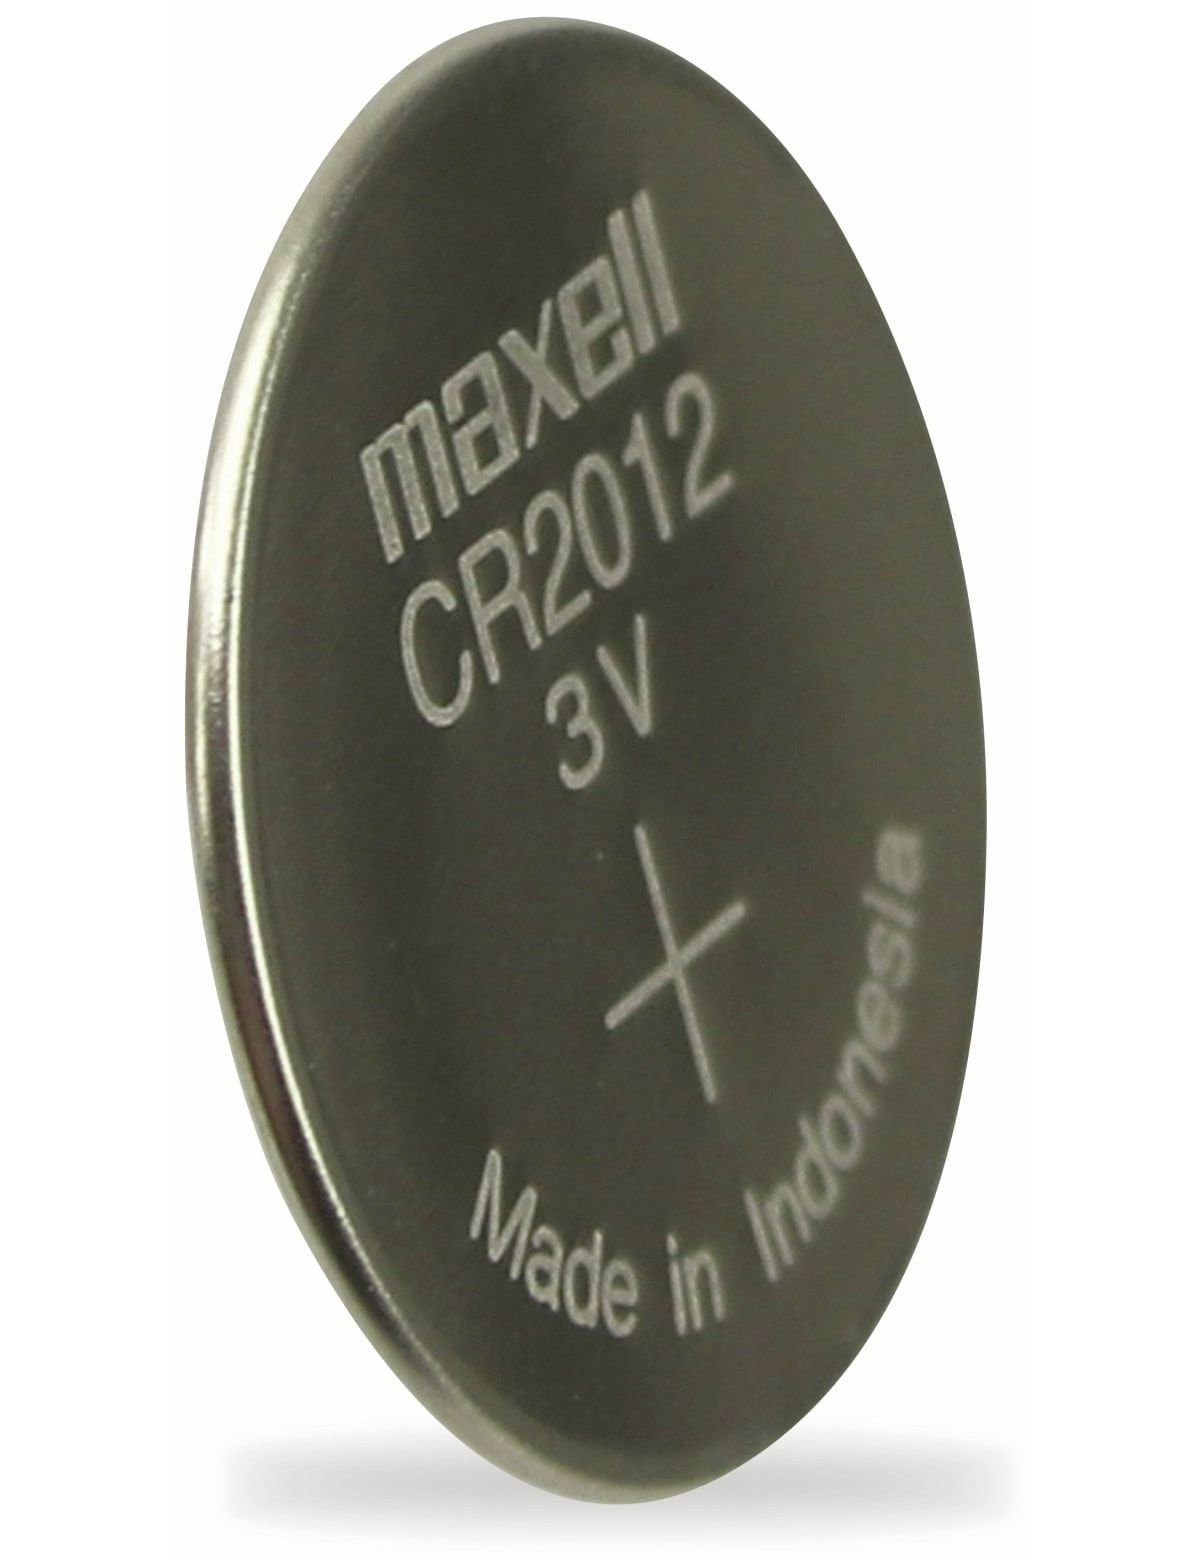 Maxell MAXELL 1 3 50 Knopfzelle mAh, Knopfzelle Lithium, CR2012, V